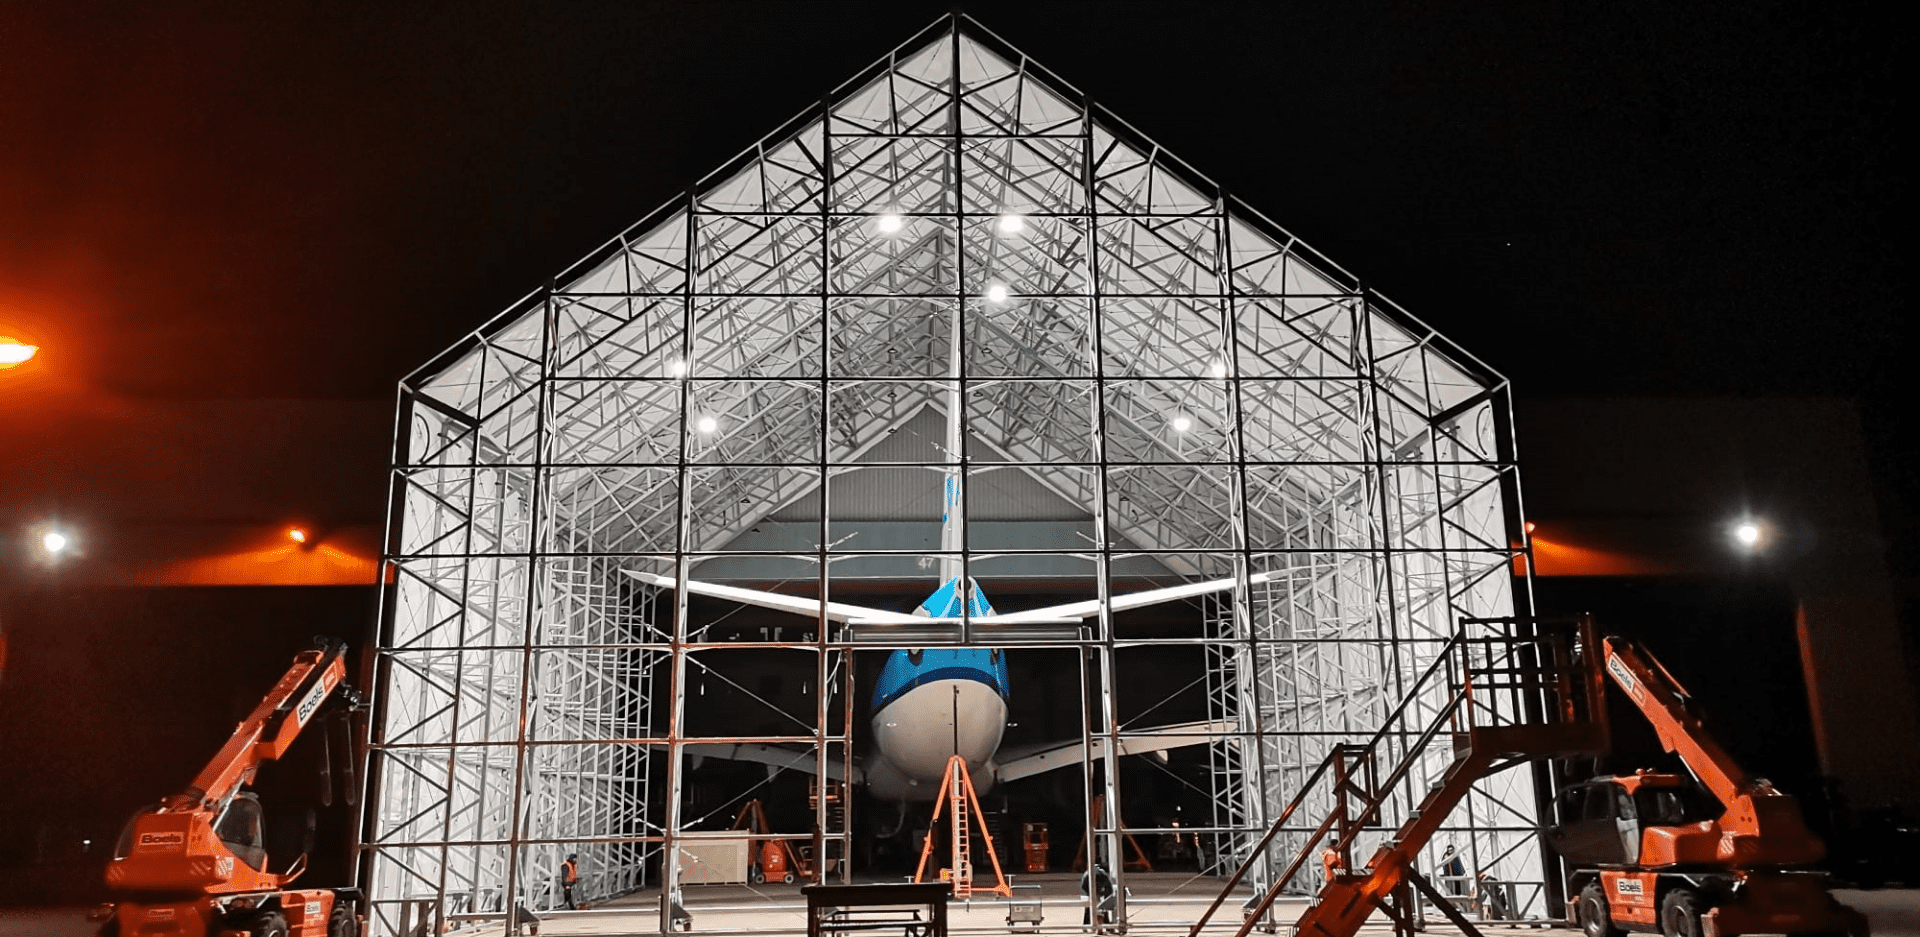 Aviolanda: A Movable Solution for Servicing Larger Aircraft